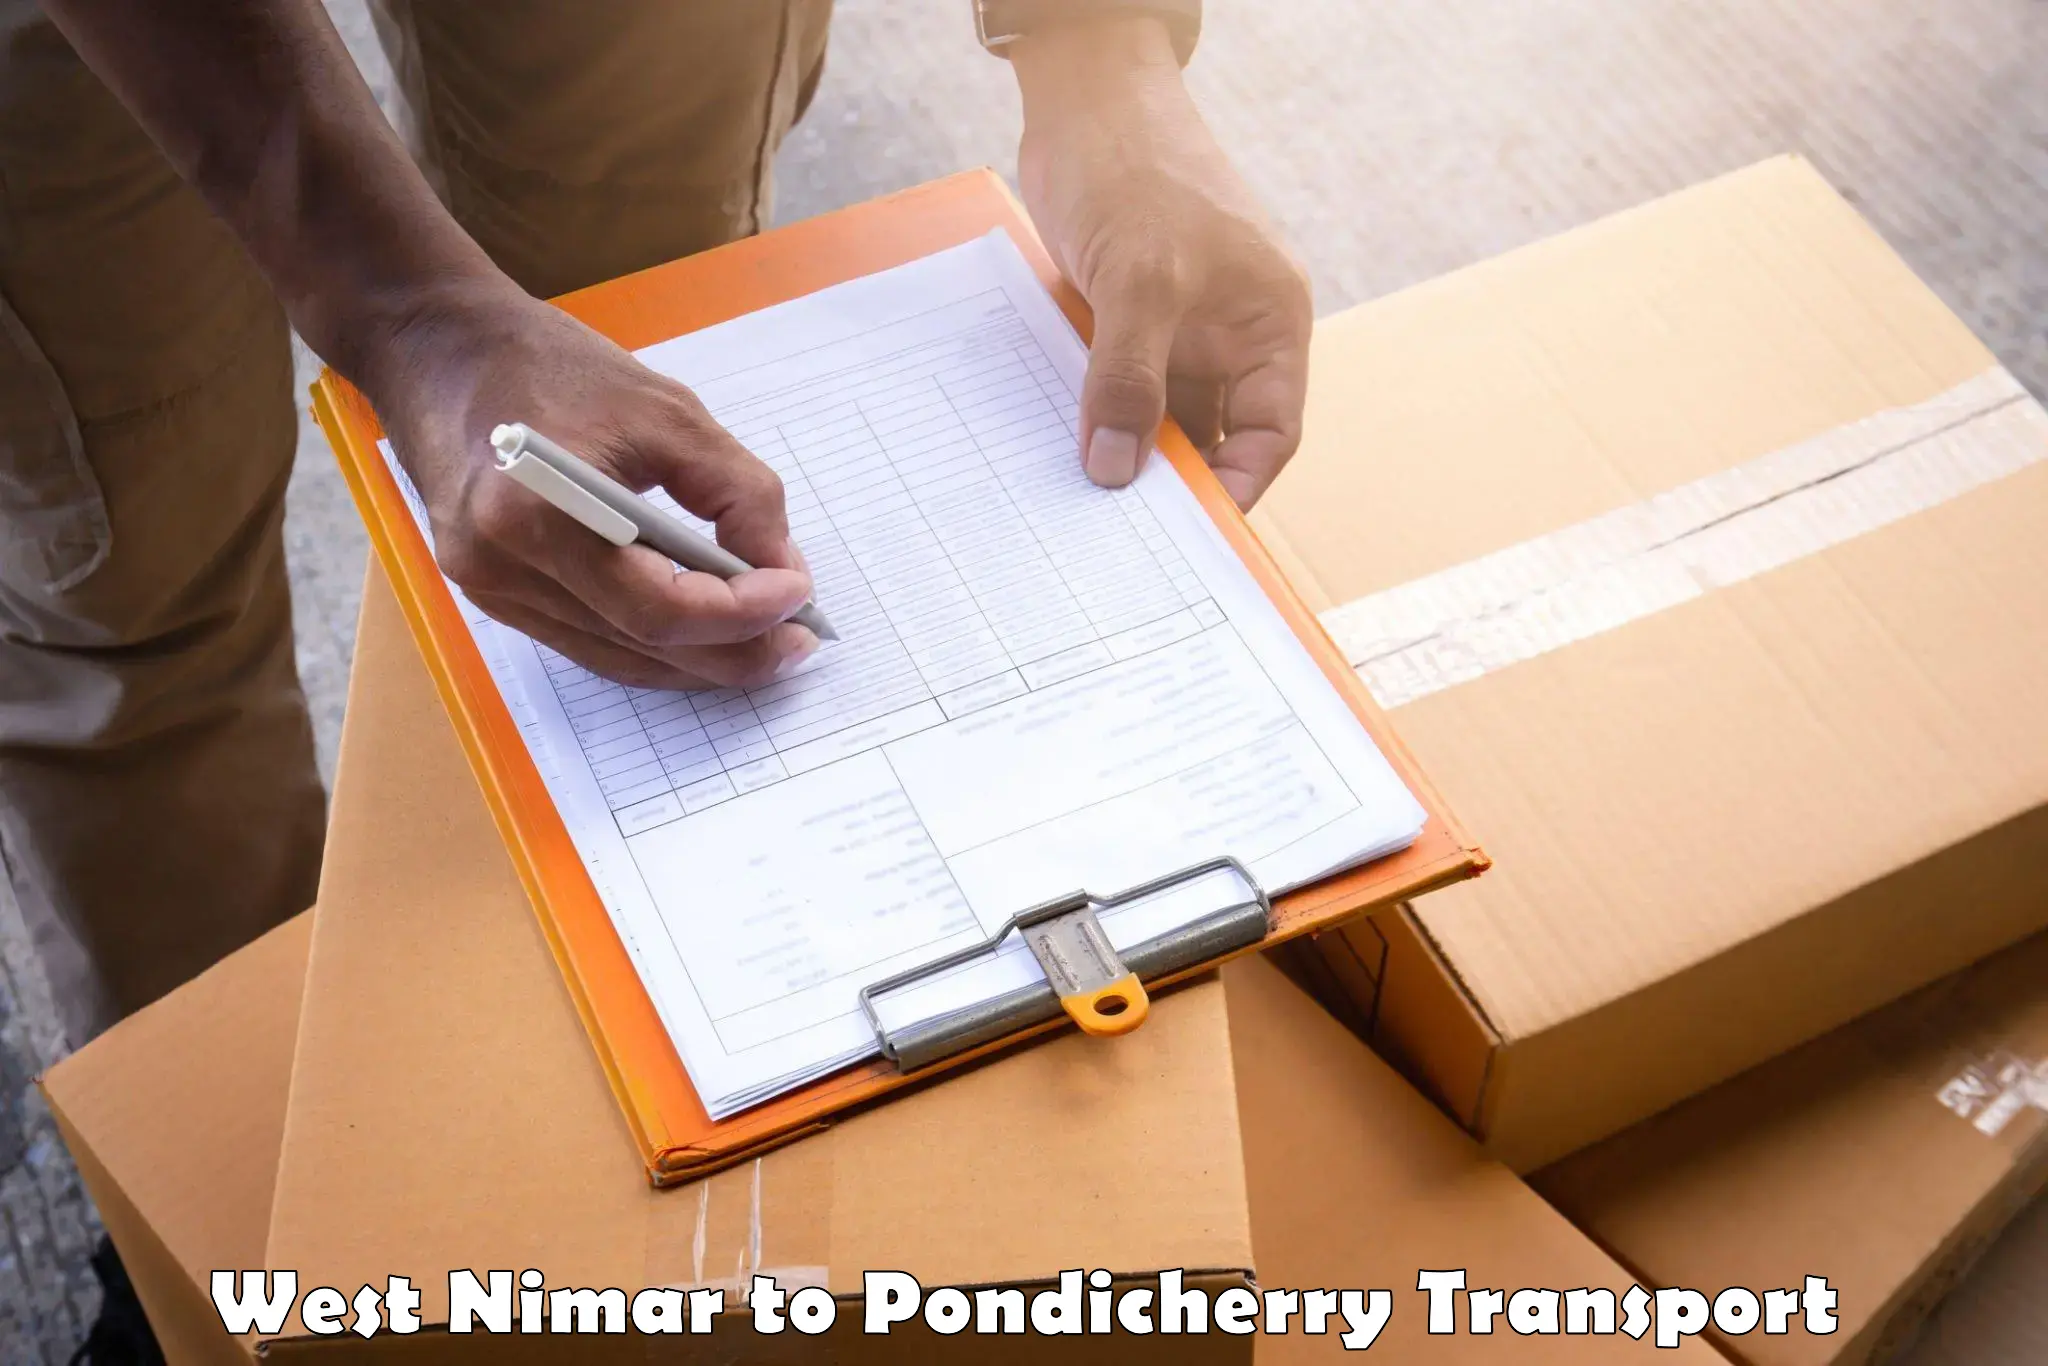 Pick up transport service West Nimar to Pondicherry